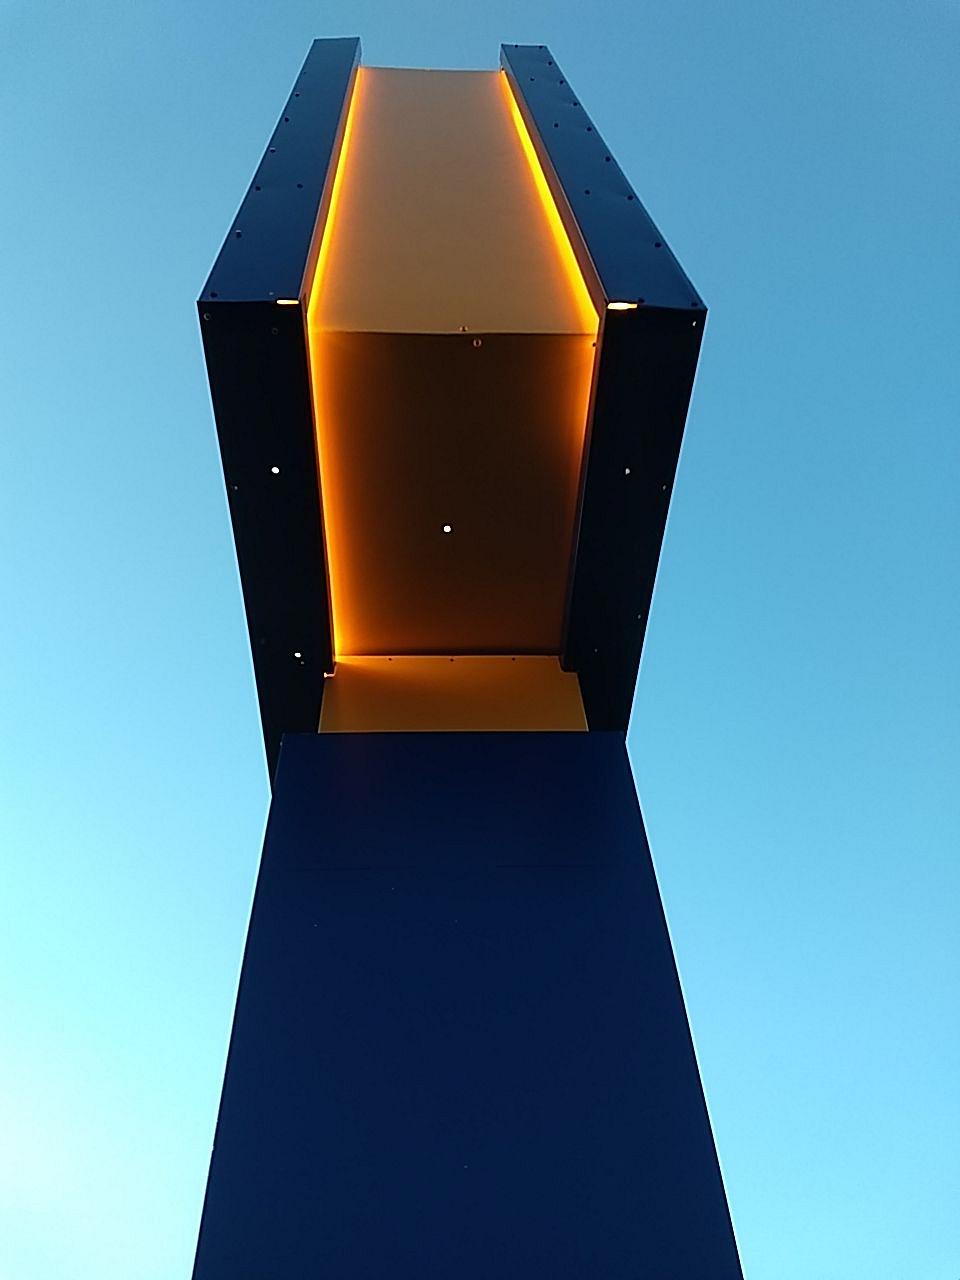 Comfort Inn Pylon Sign Lighting - orange and blue halo lit - side view